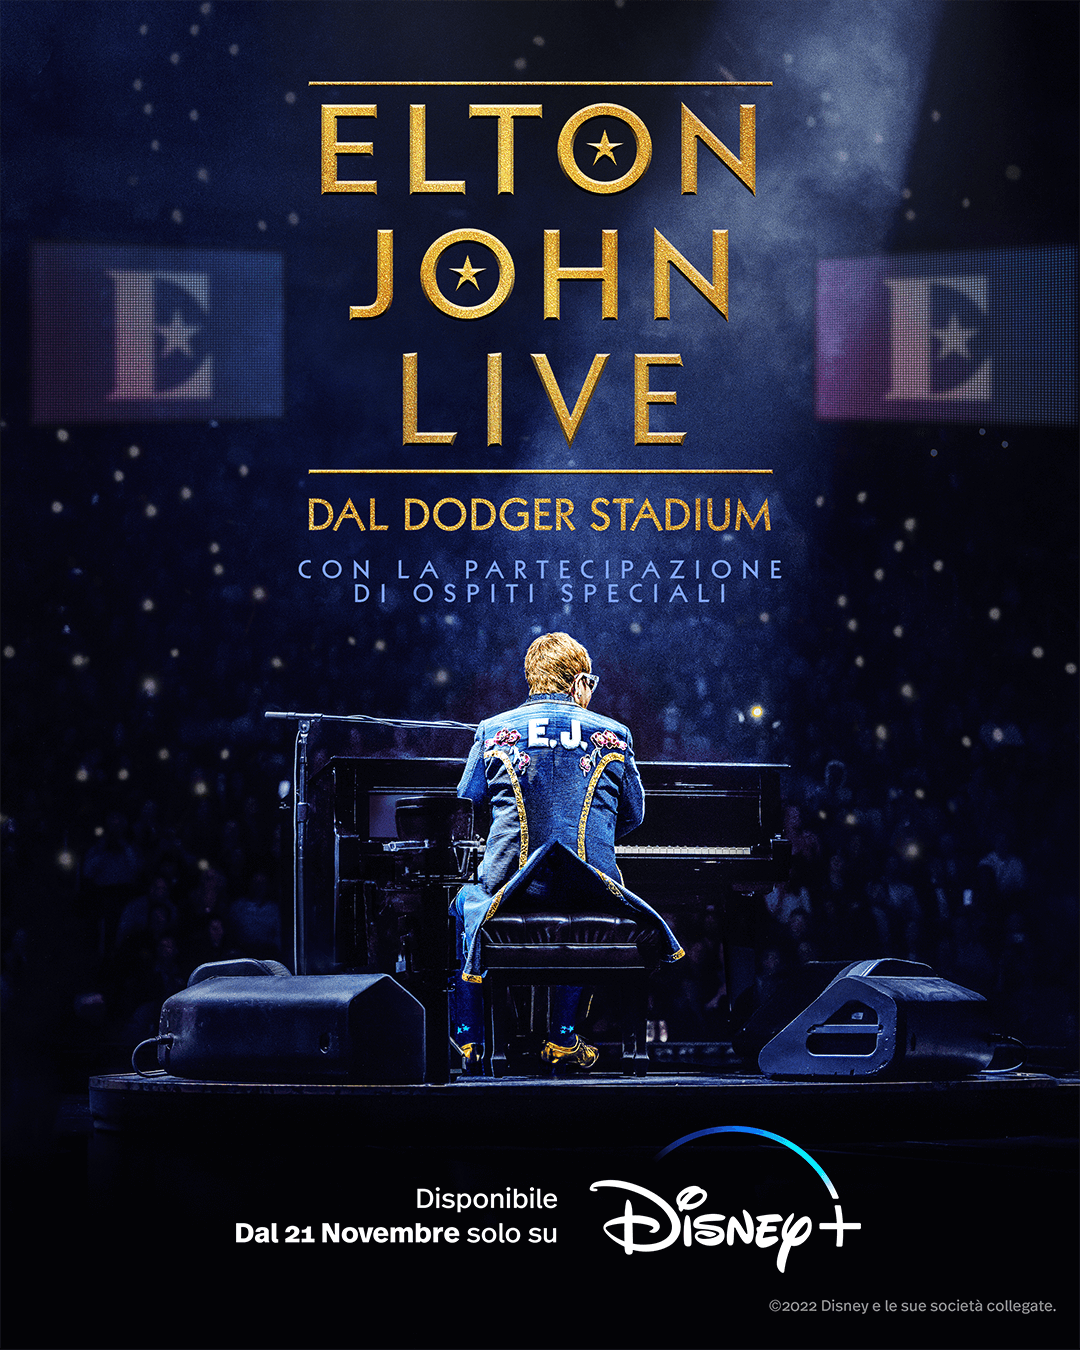 Elton John Live dal Dodger Stadium, il trailer del concerto evento Disney+ - ELJ Key art 4 51 - Gay.it